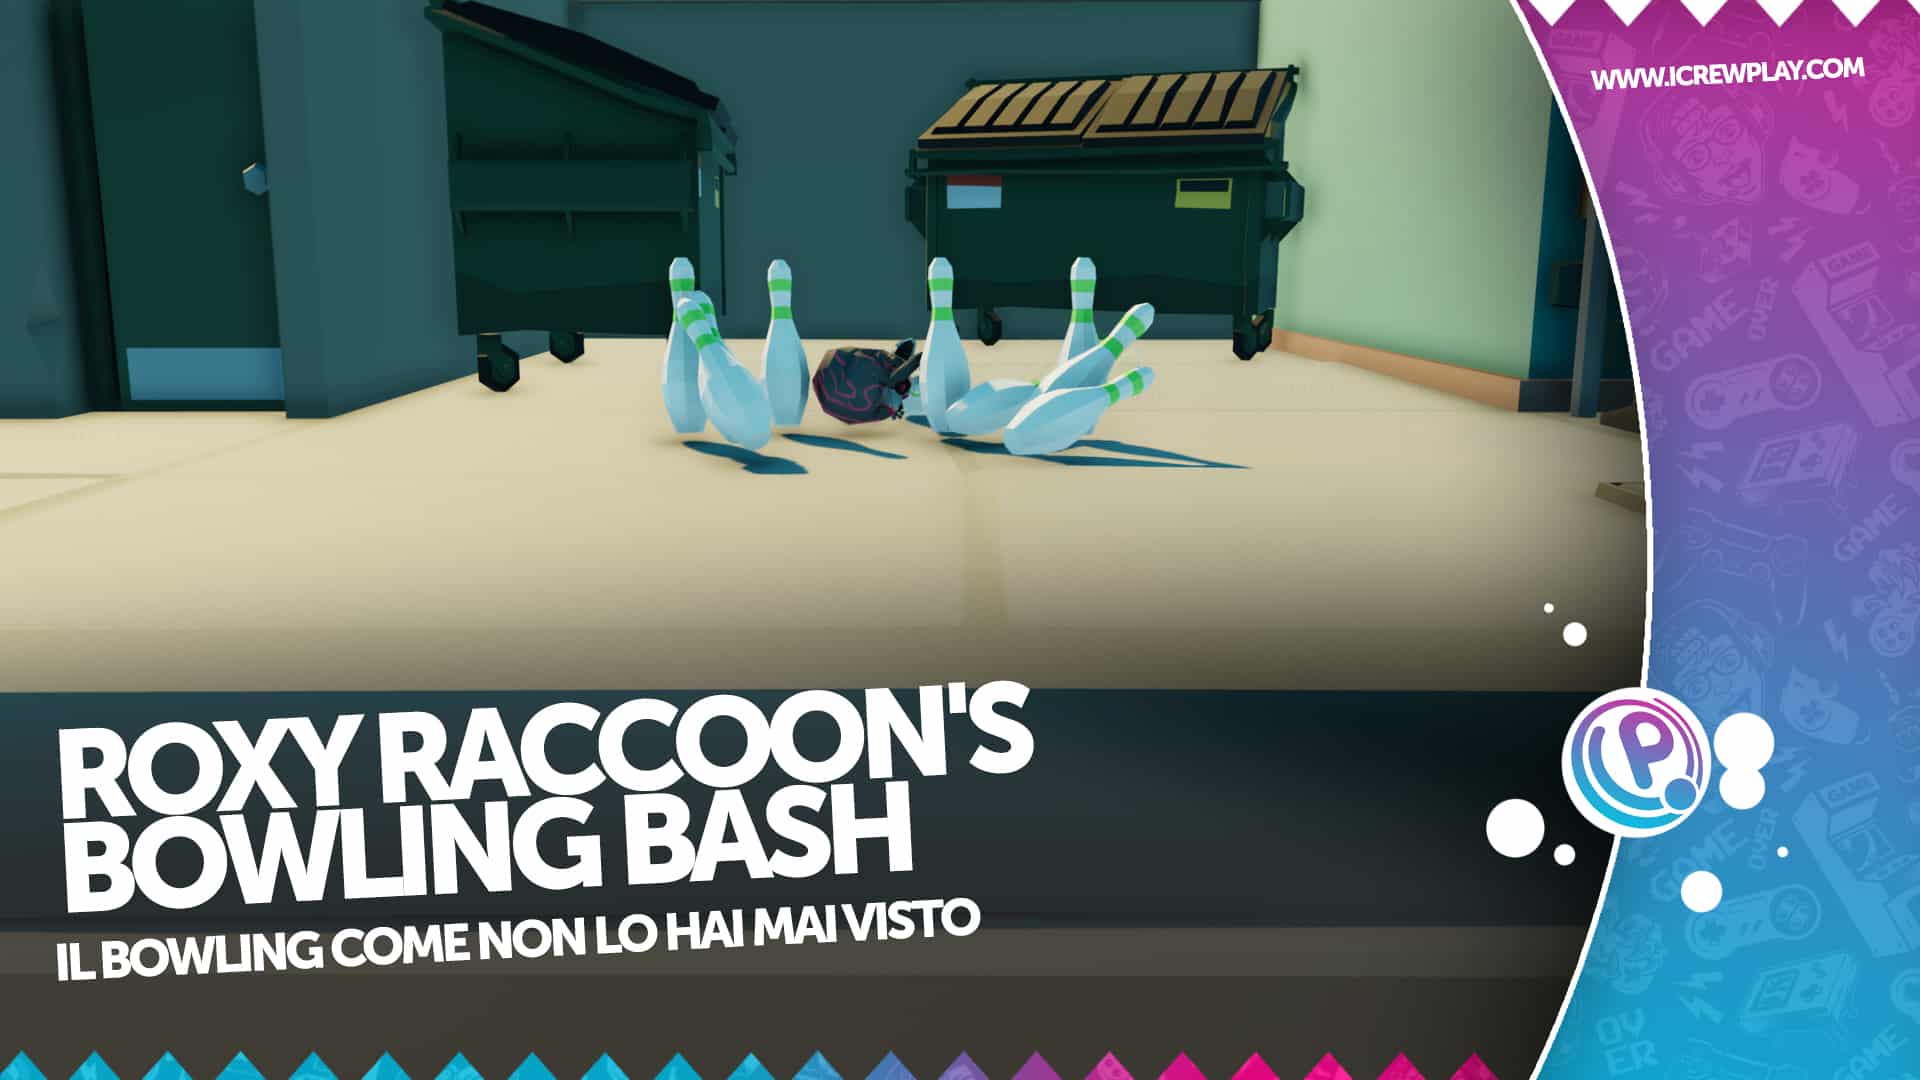 Roxy Raccoon's Bowling Bash